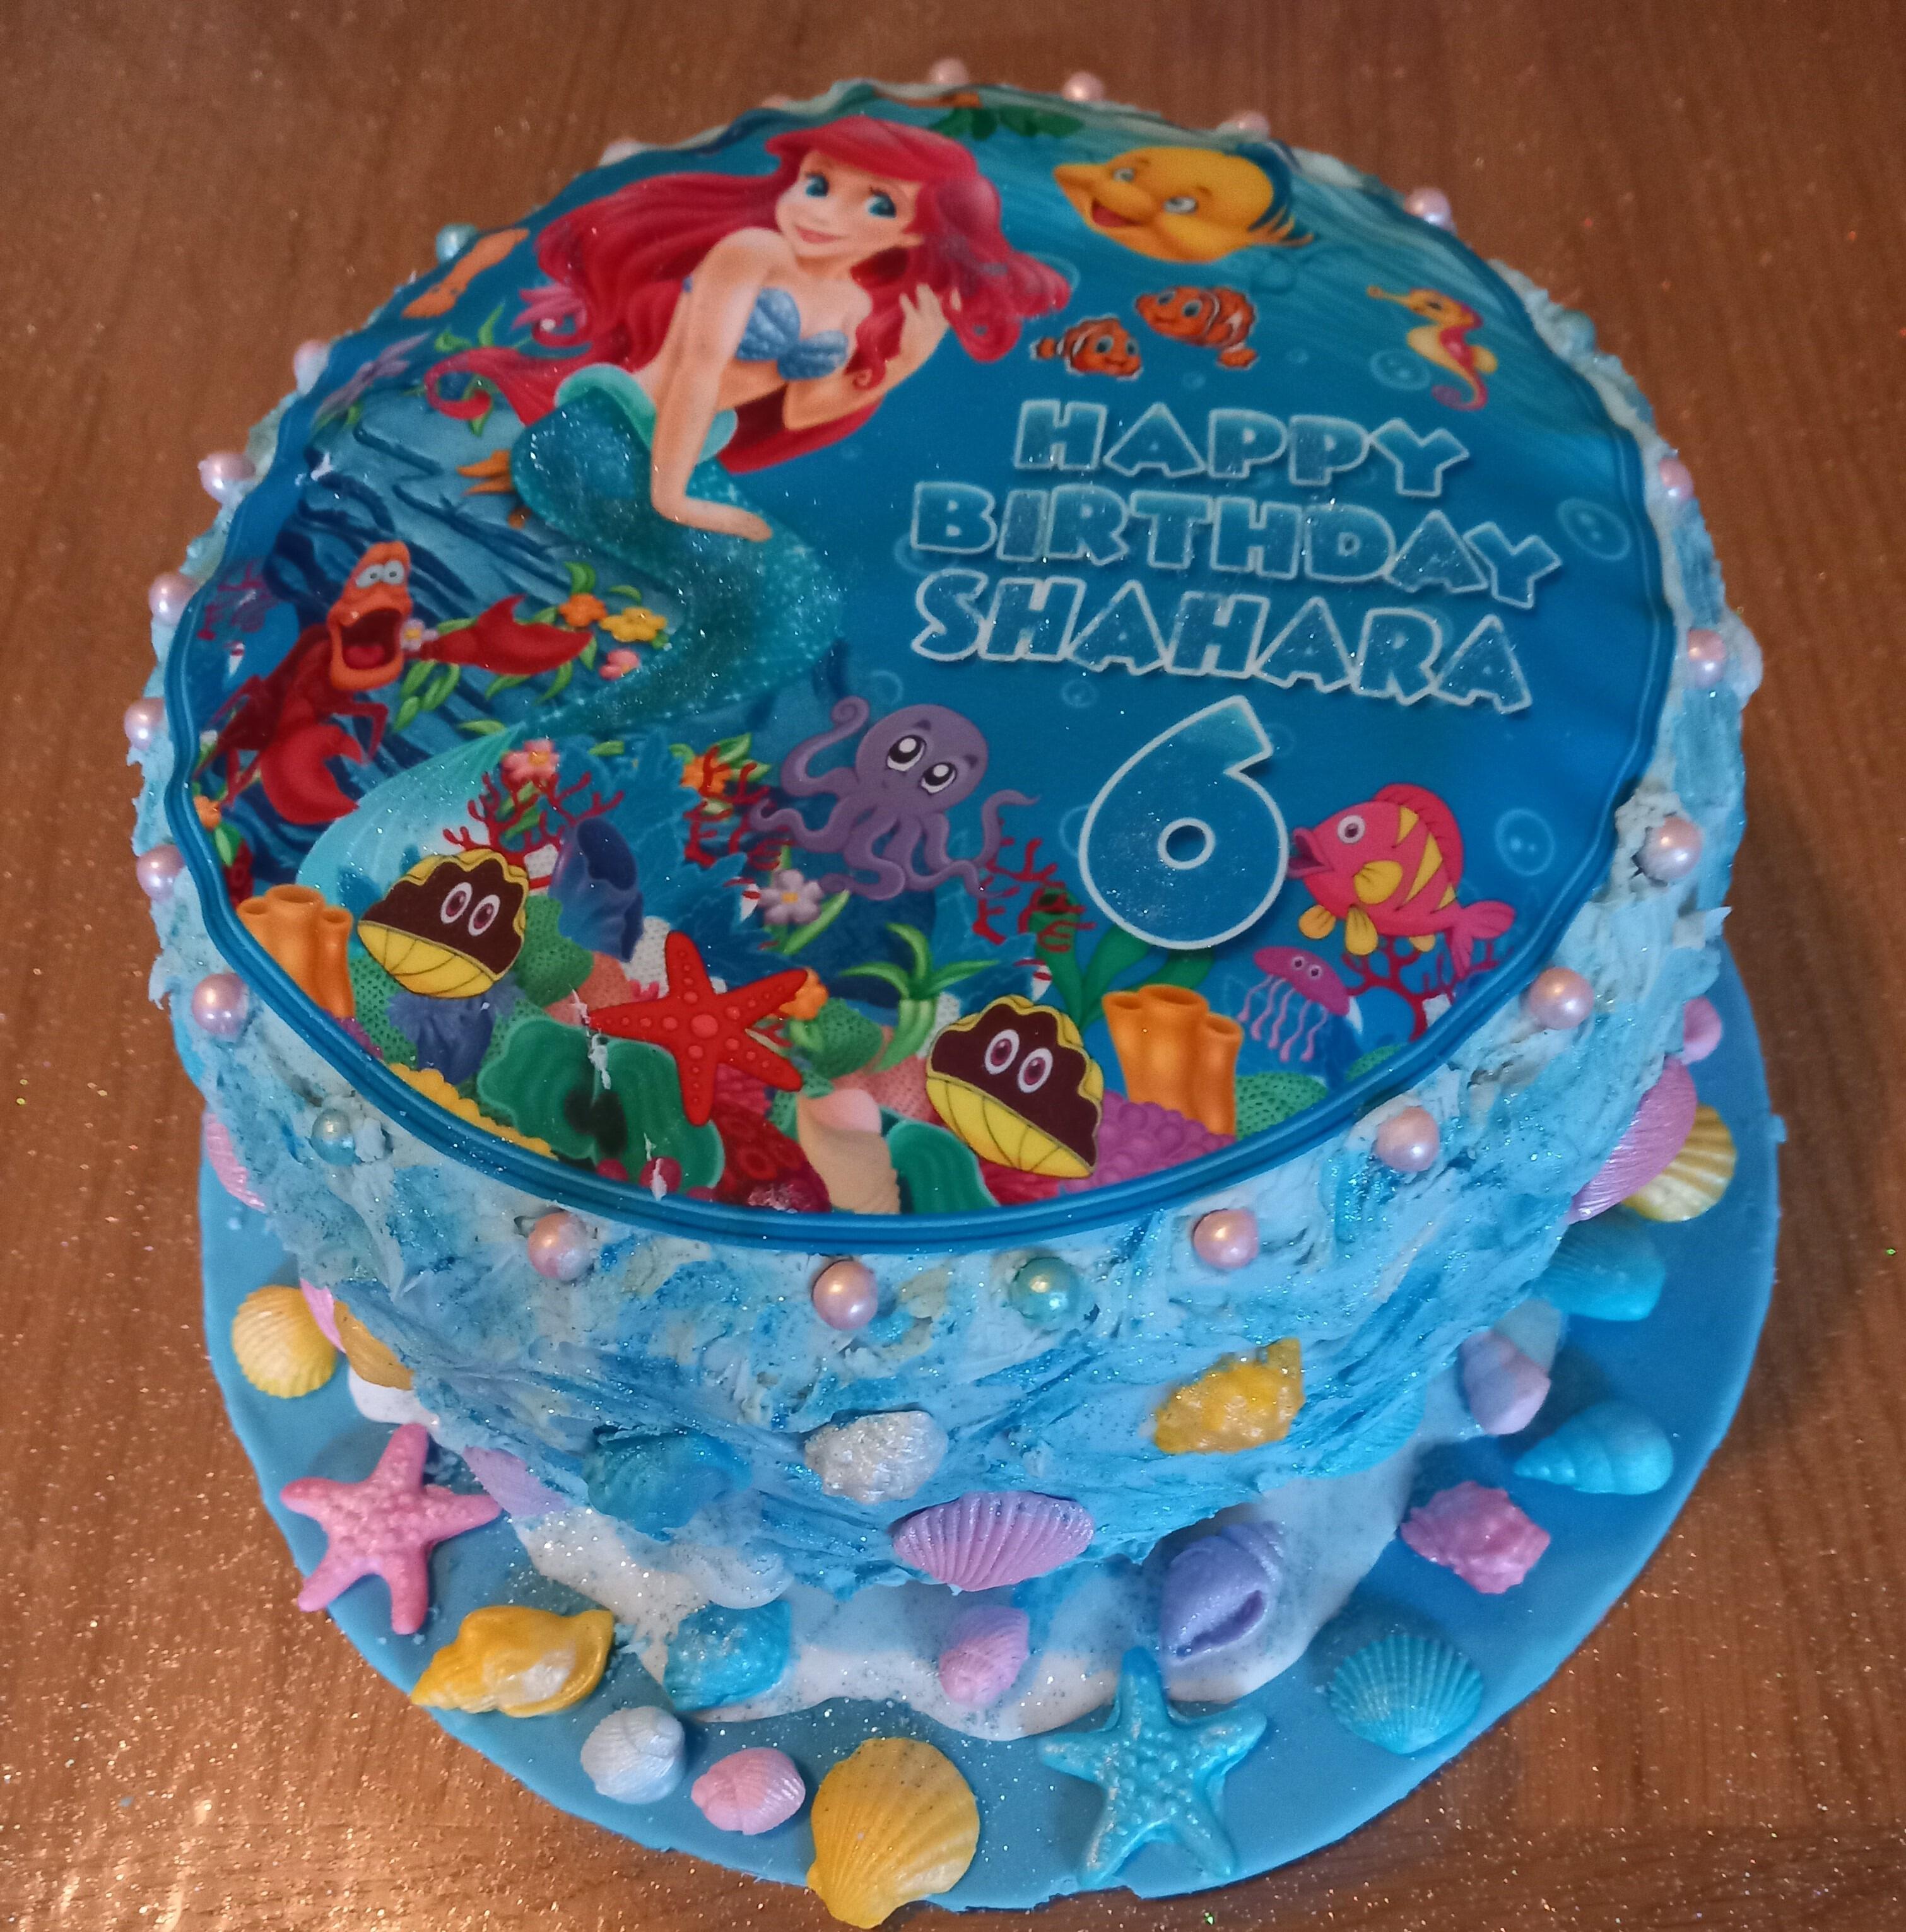 Customers decorated cake using coloured sea shells